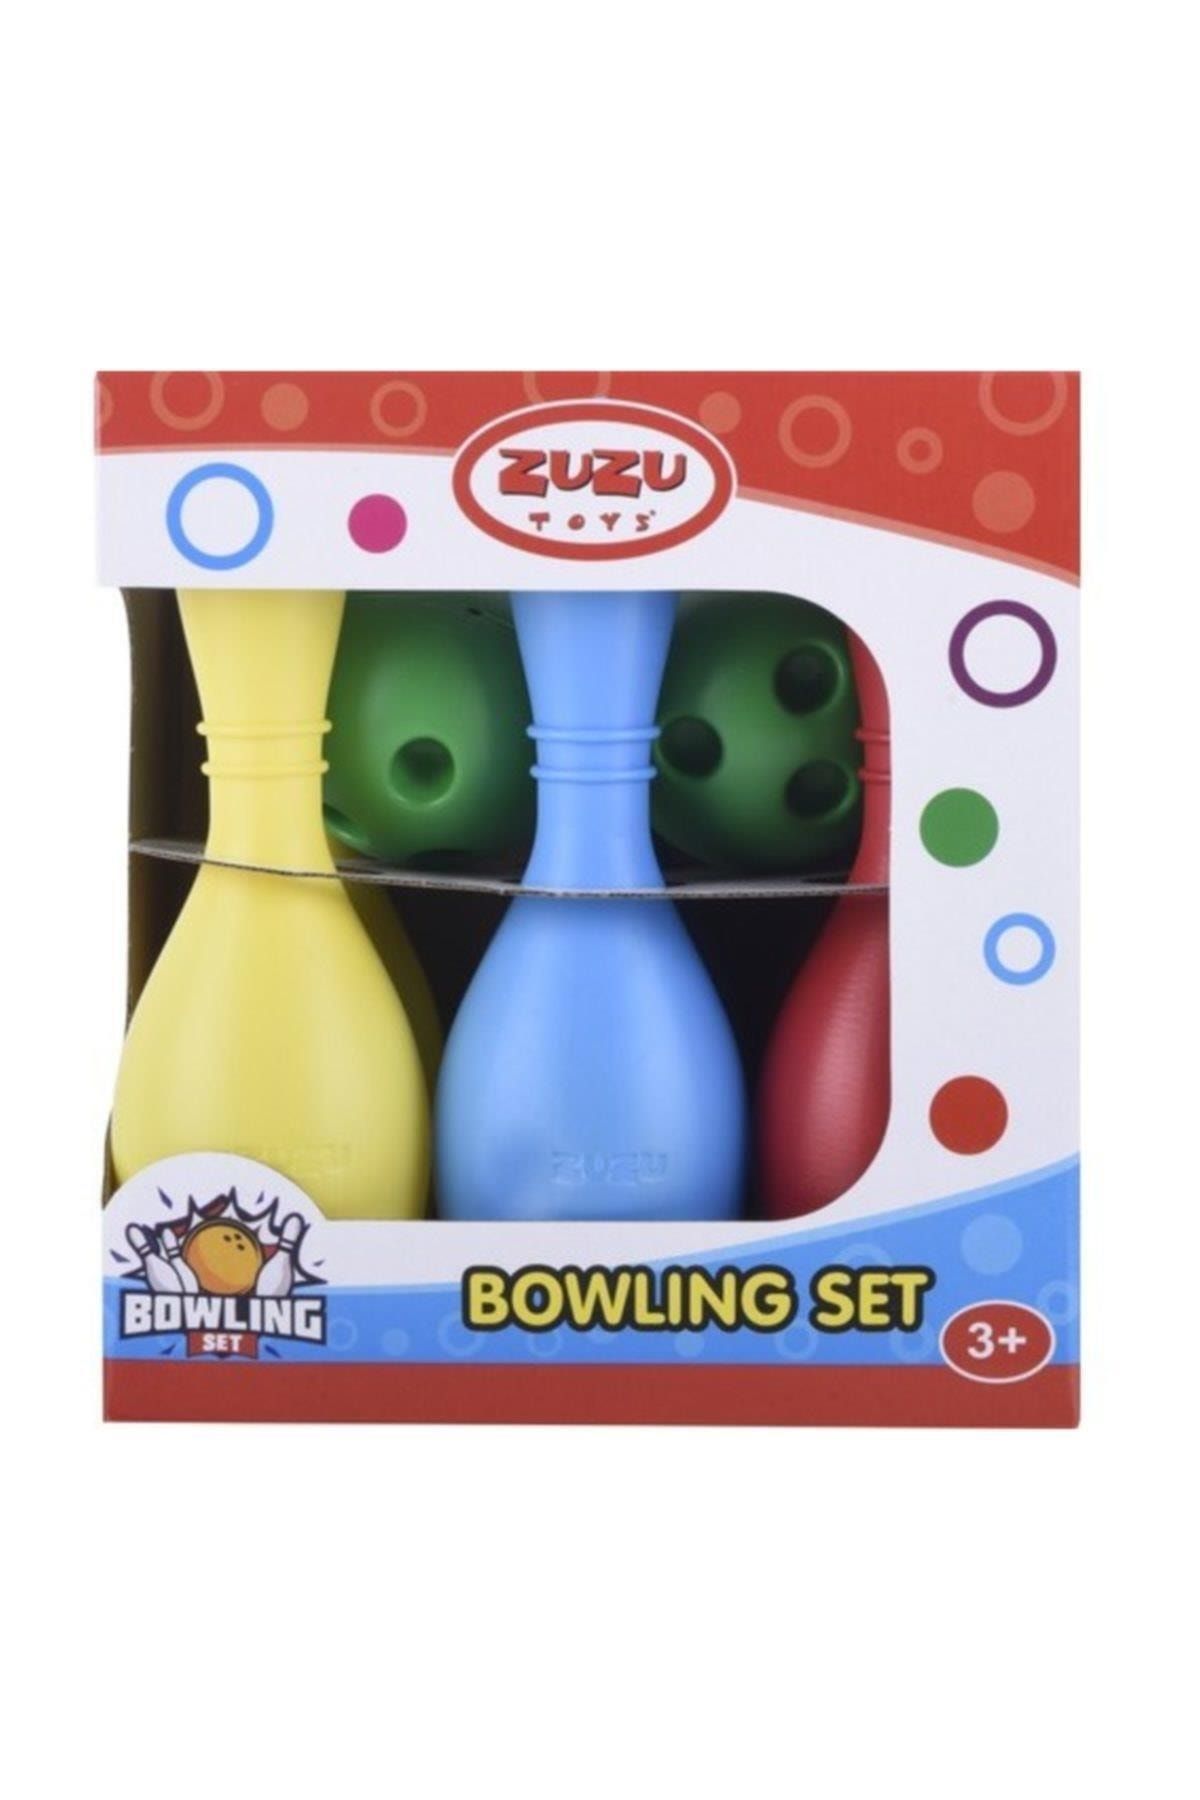 Zuzu Bowling